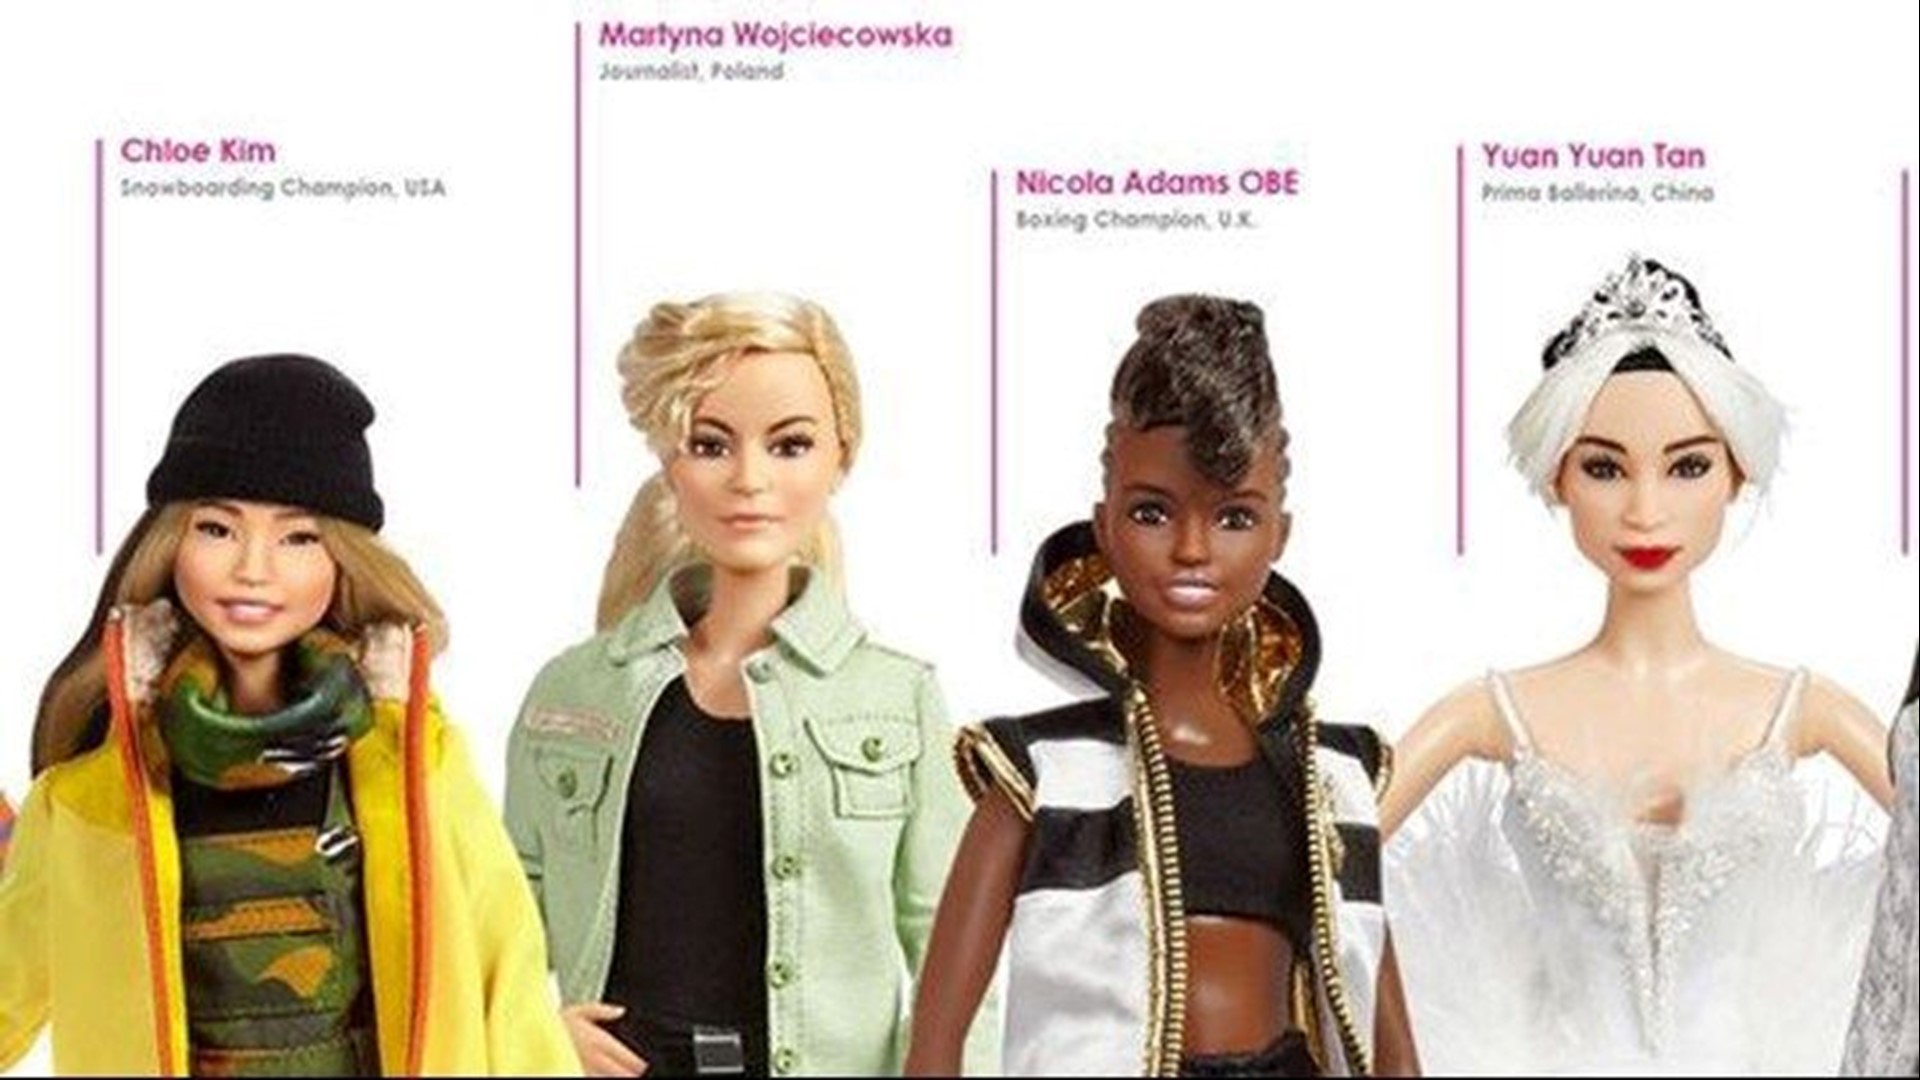 Barbie launching new doll series of "Inspiring Women"